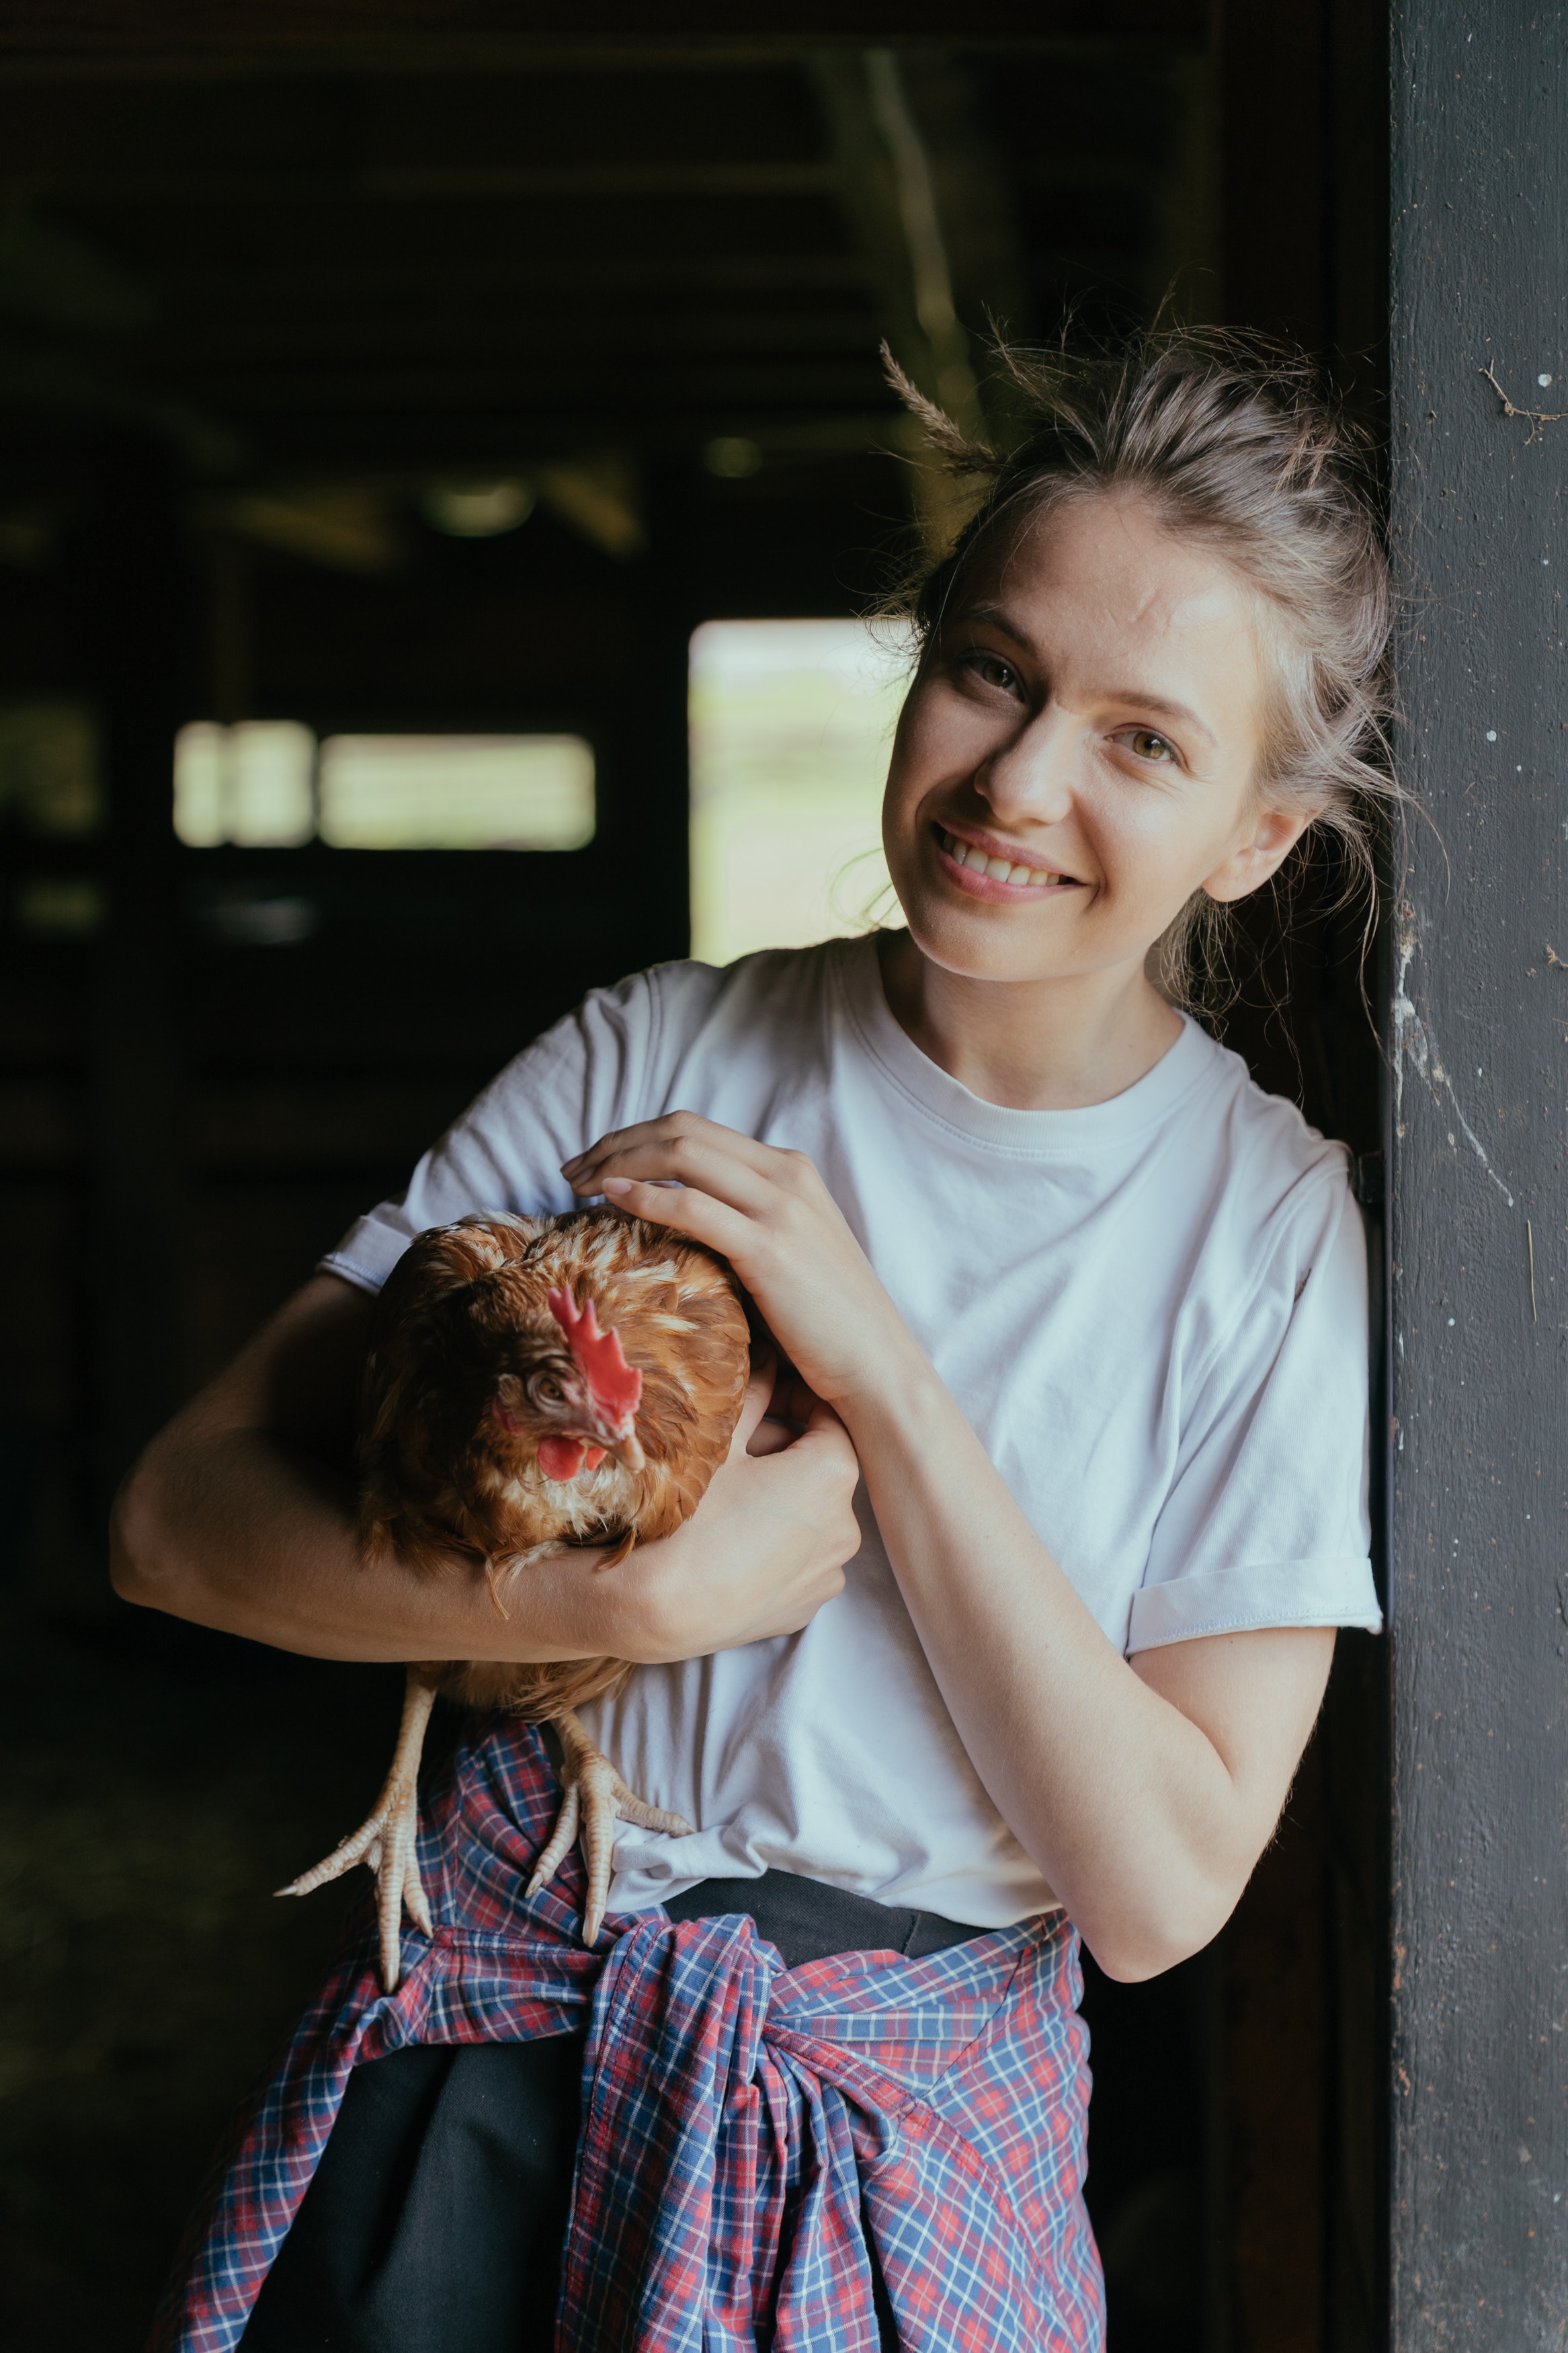 Lady holding chicken